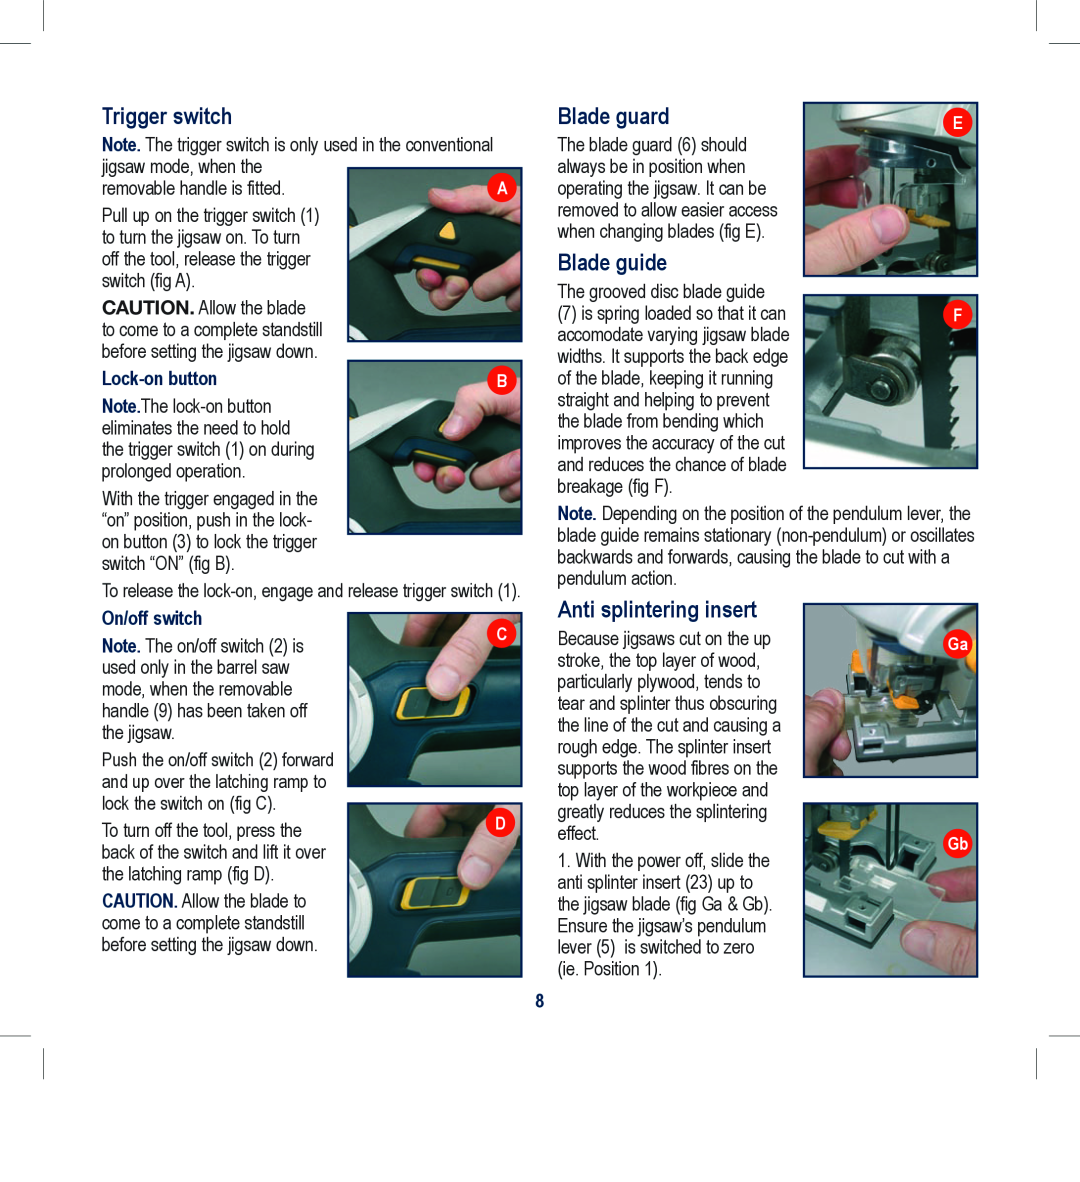 Global Machinery Company SPJ2HM Trigger switch, Blade guard, Blade guide, Anti splintering insert, Lock-on button 